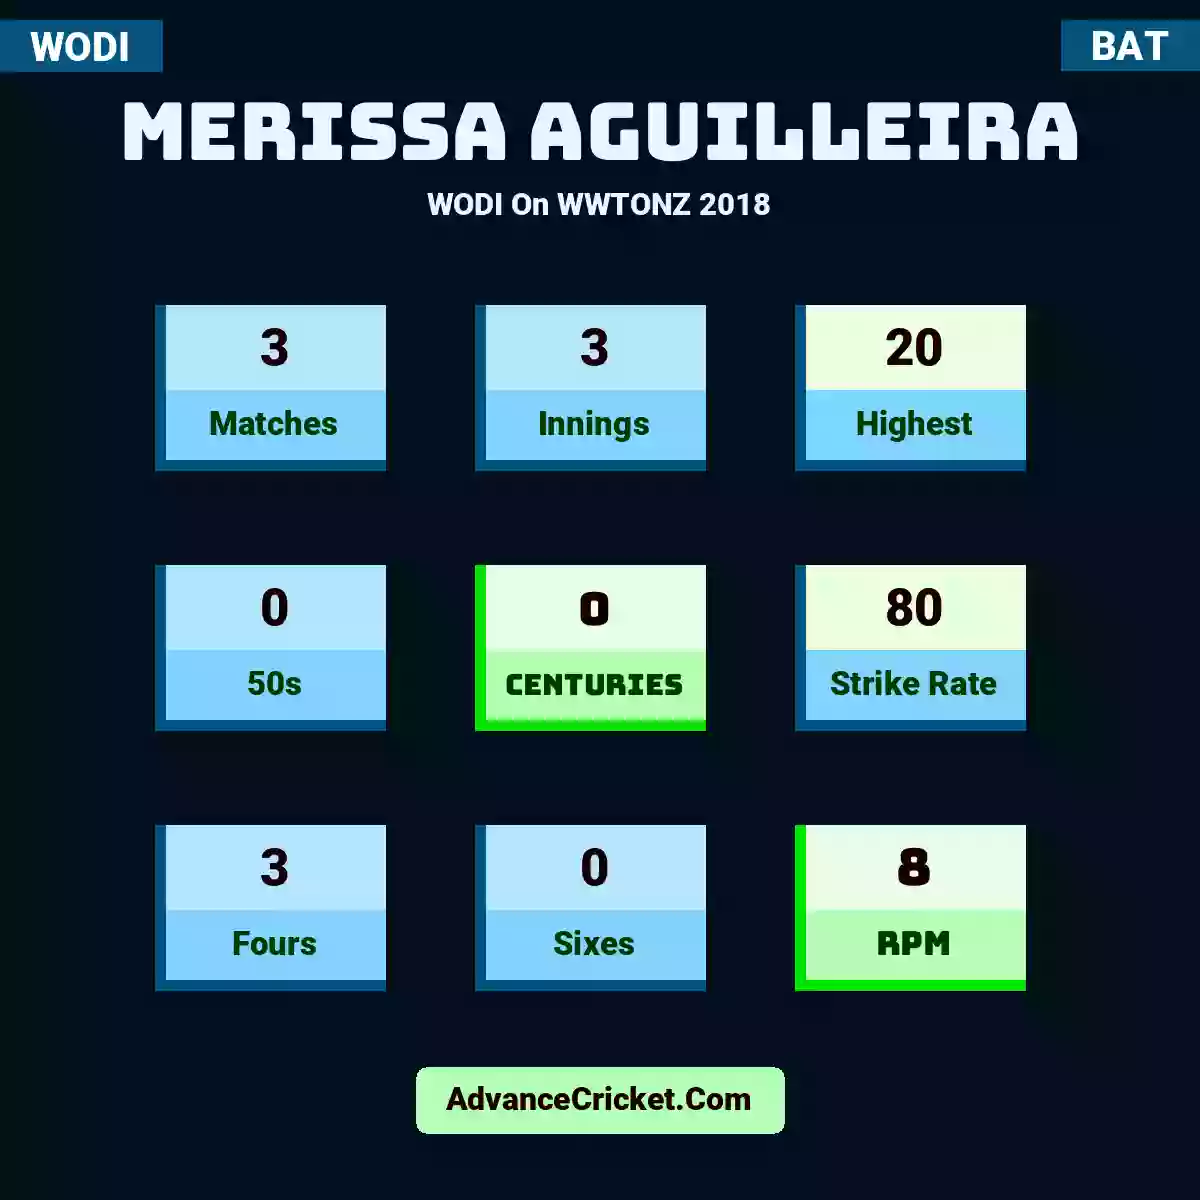 Merissa Aguilleira WODI  On WWTONZ 2018, Merissa Aguilleira played 3 matches, scored 20 runs as highest, 0 half-centuries, and 0 centuries, with a strike rate of 80. M.Aguilleira hit 3 fours and 0 sixes, with an RPM of 8.